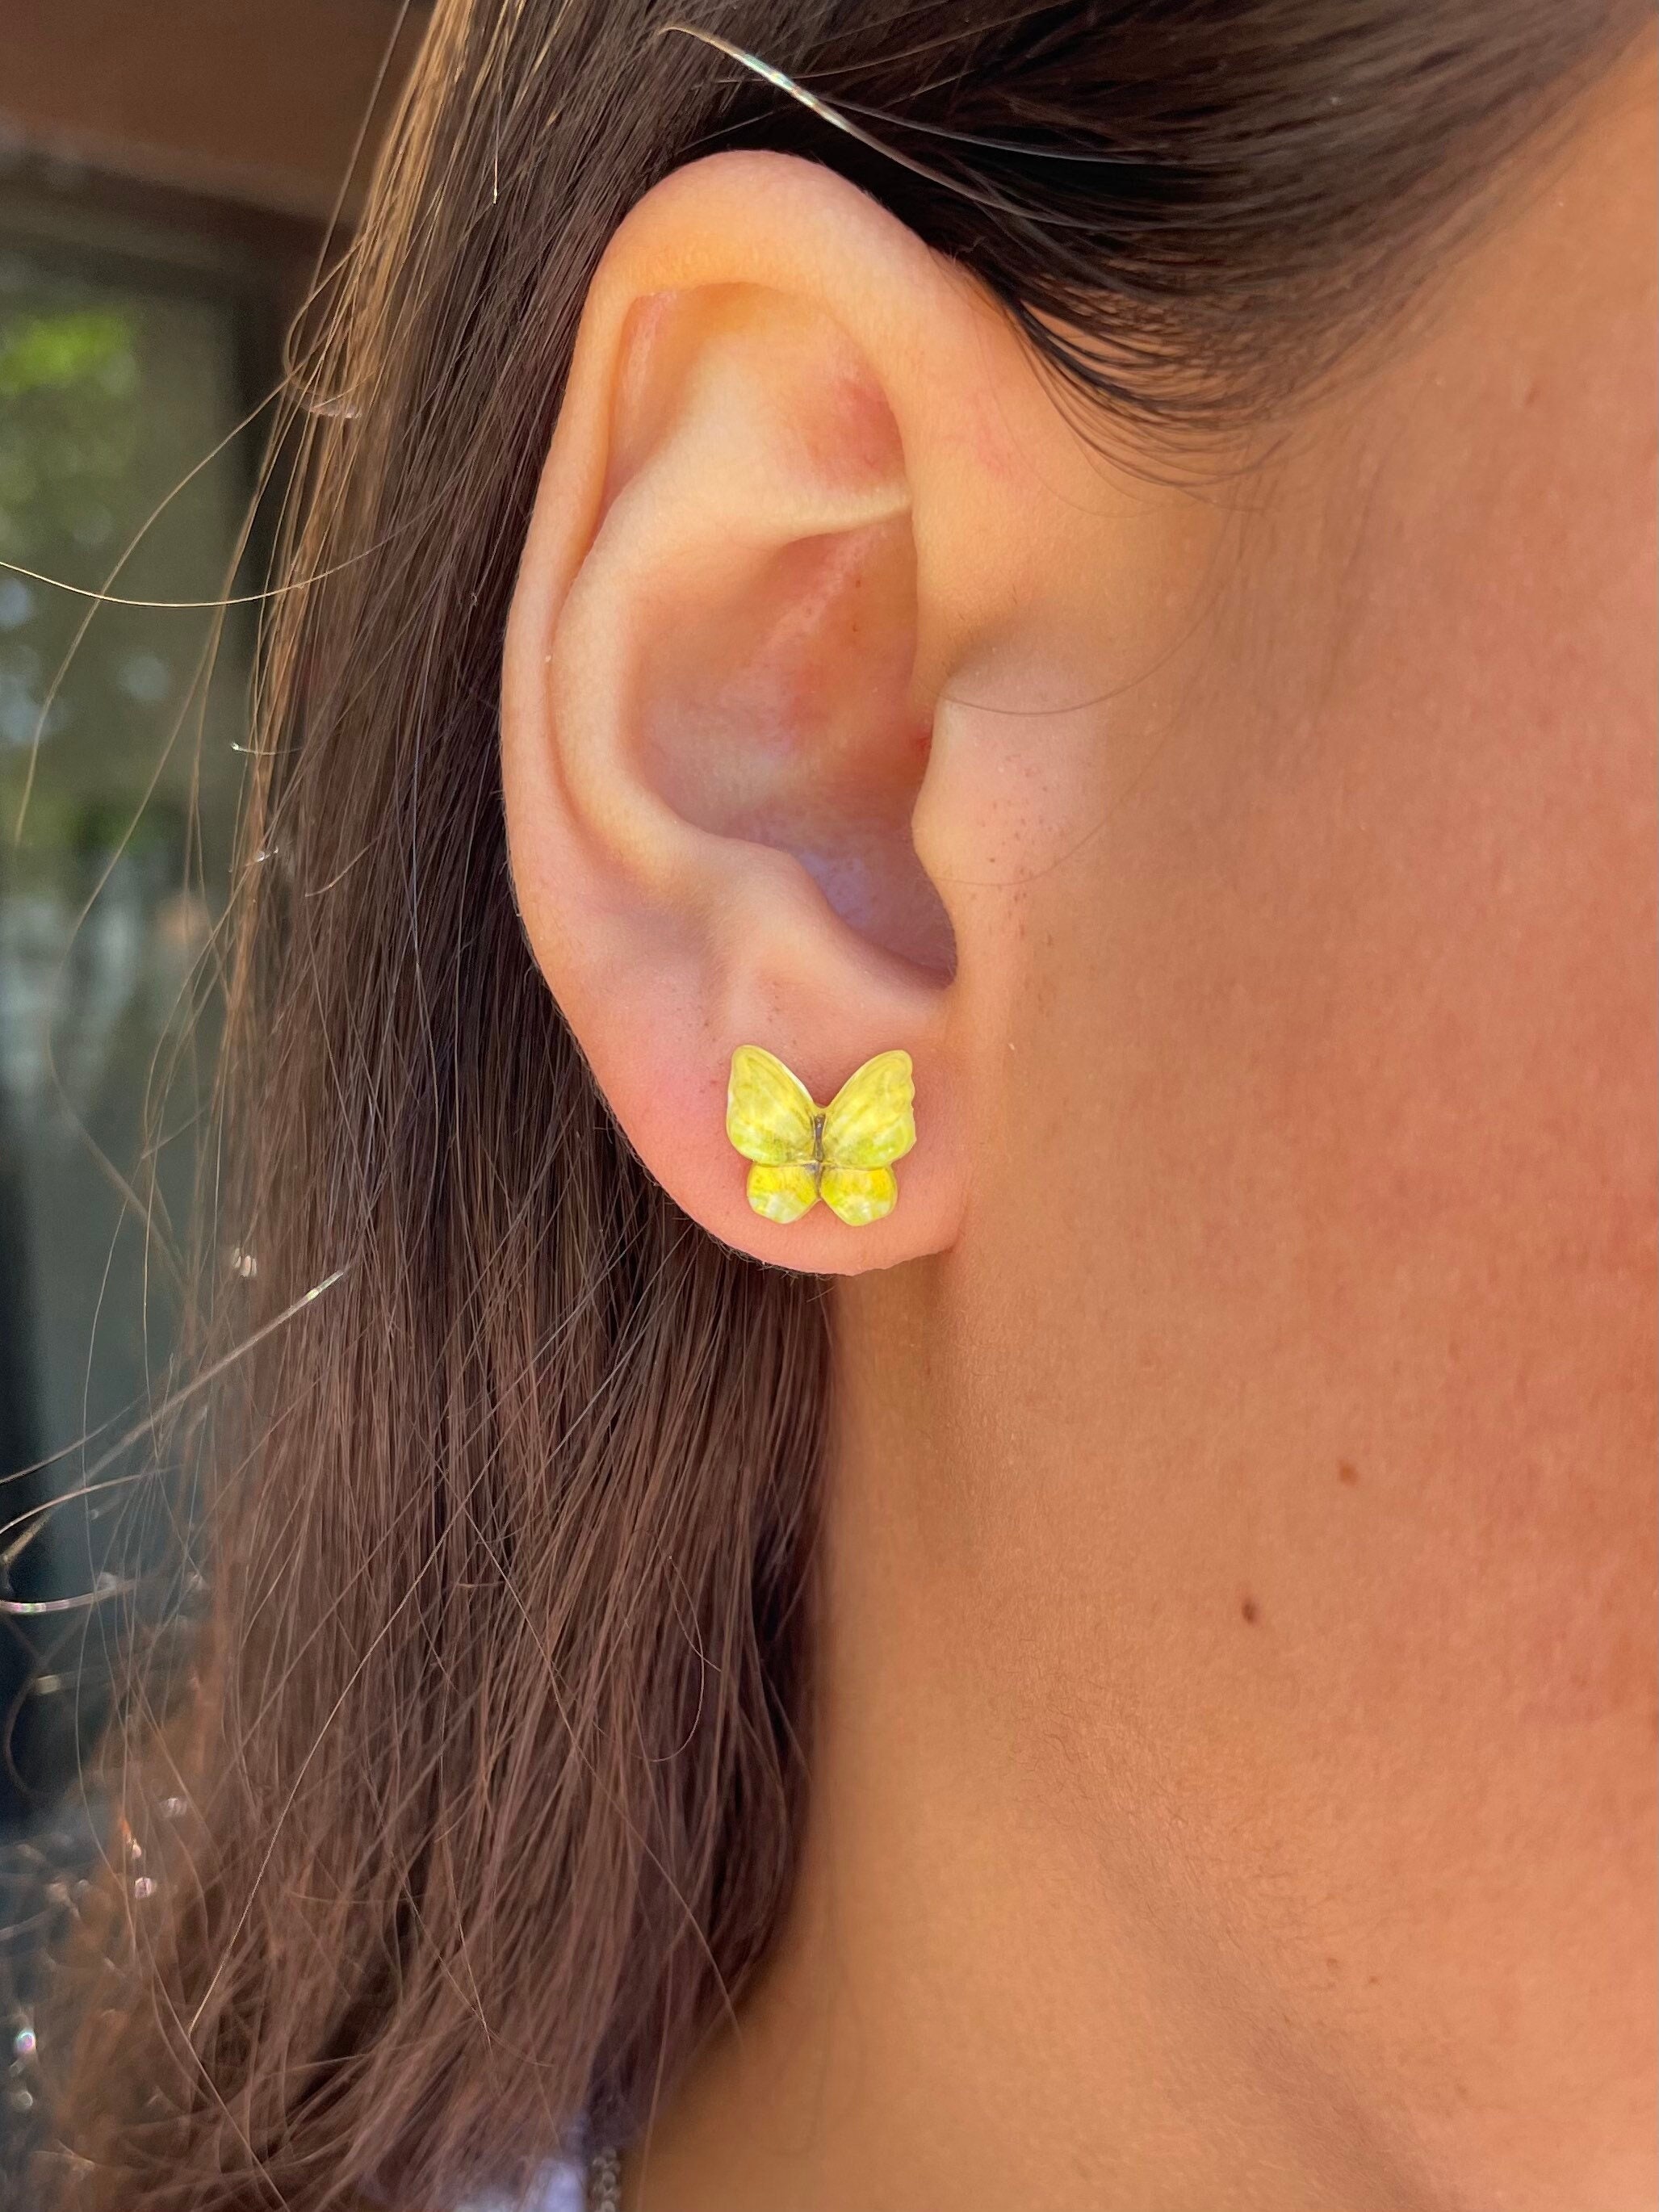 10 Titanium Ear Hooks. Allergy Free Yellow 